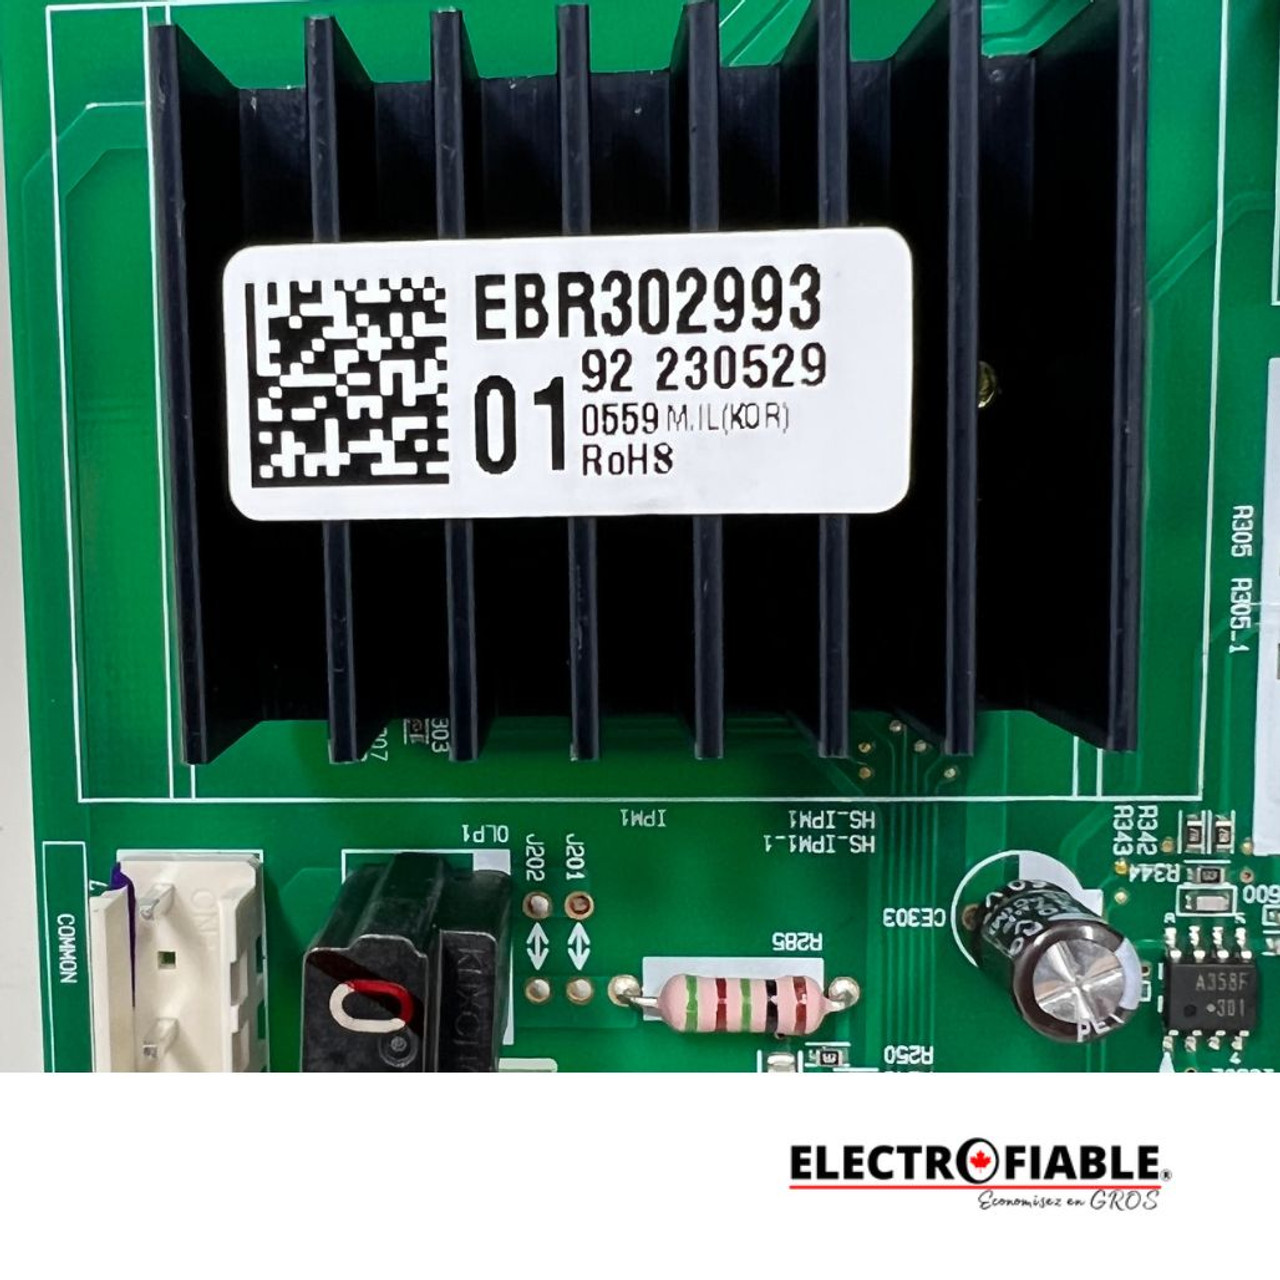 EBR30299301 Refrigerator PCB Assembly